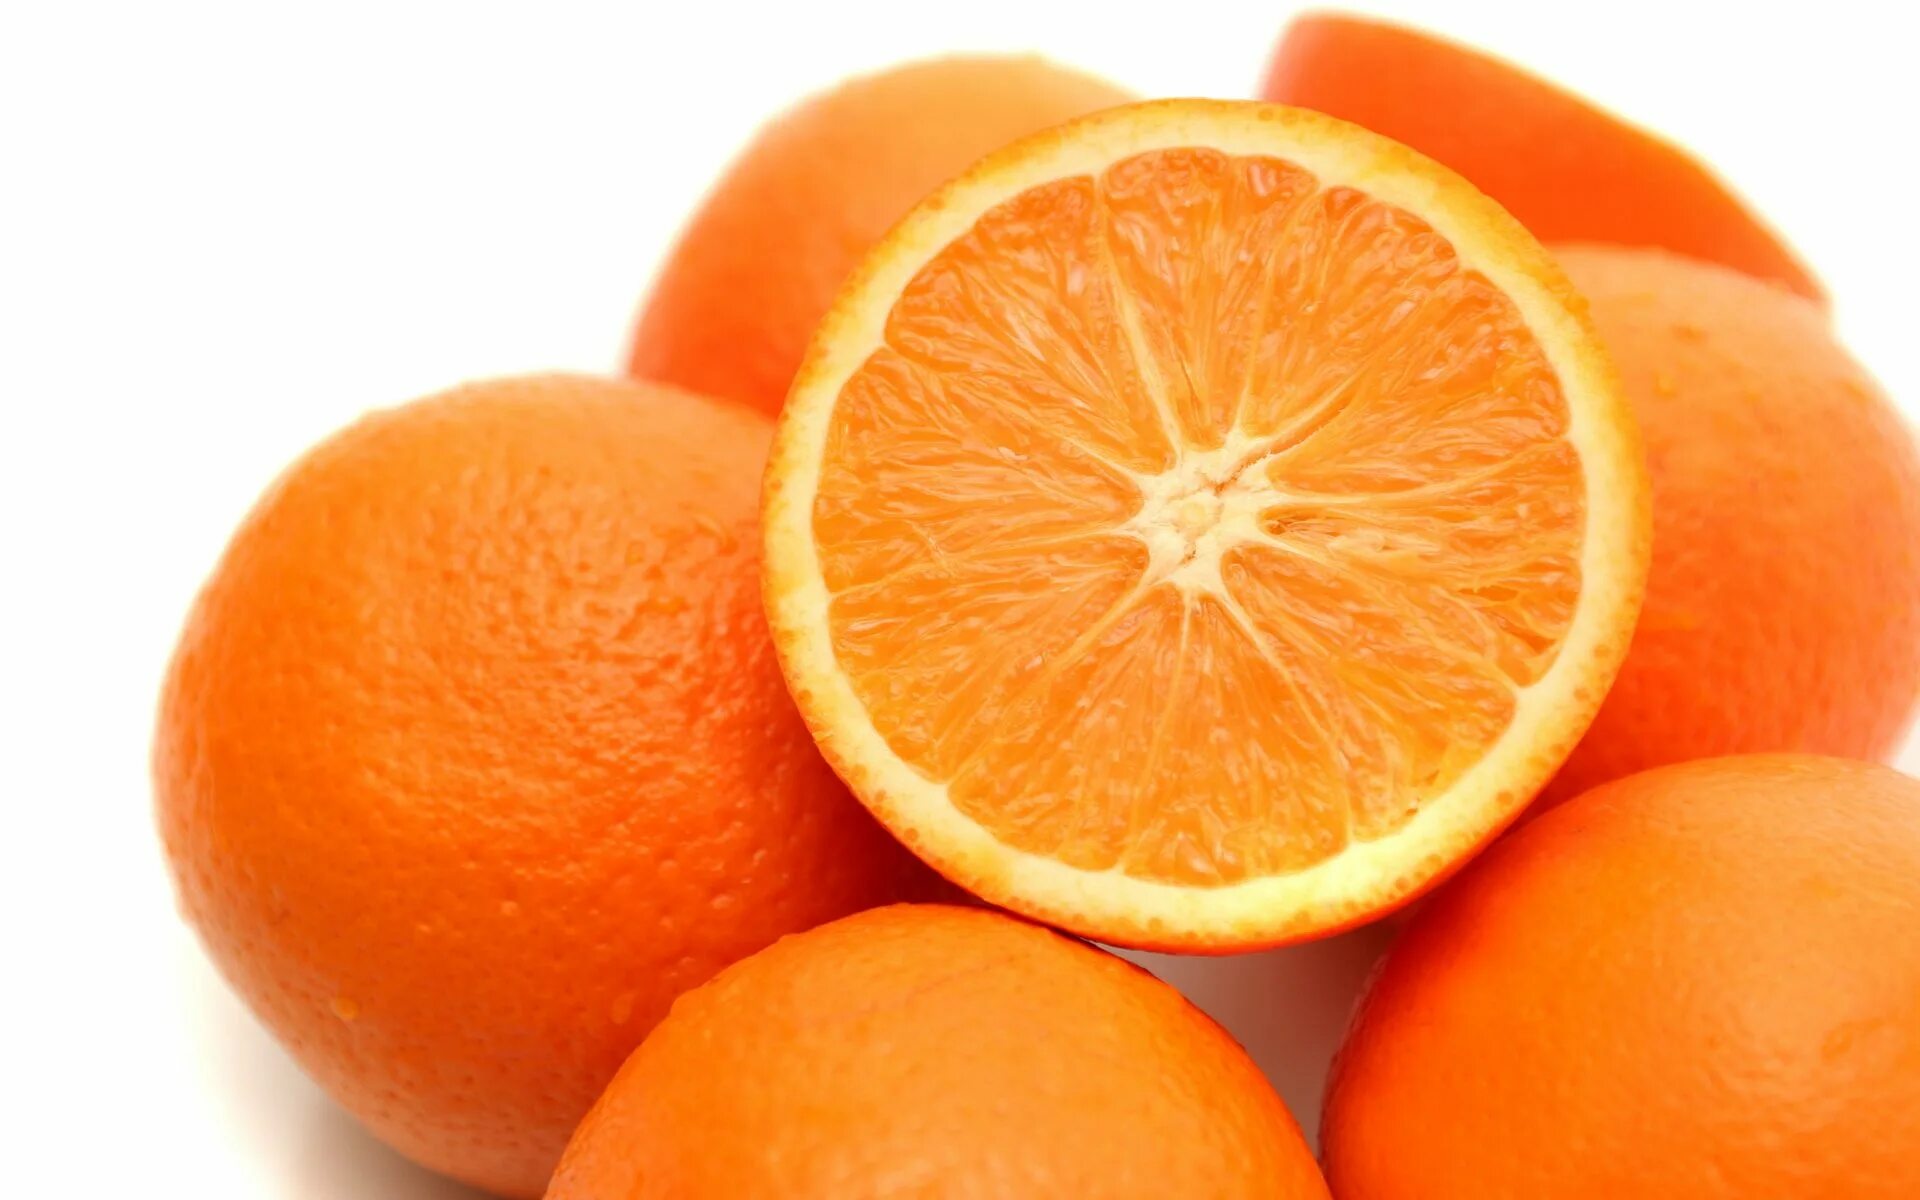 Orange choose. Померанец оранж. Апельсин. Апельсин на белом фоне. Апельсин фото.